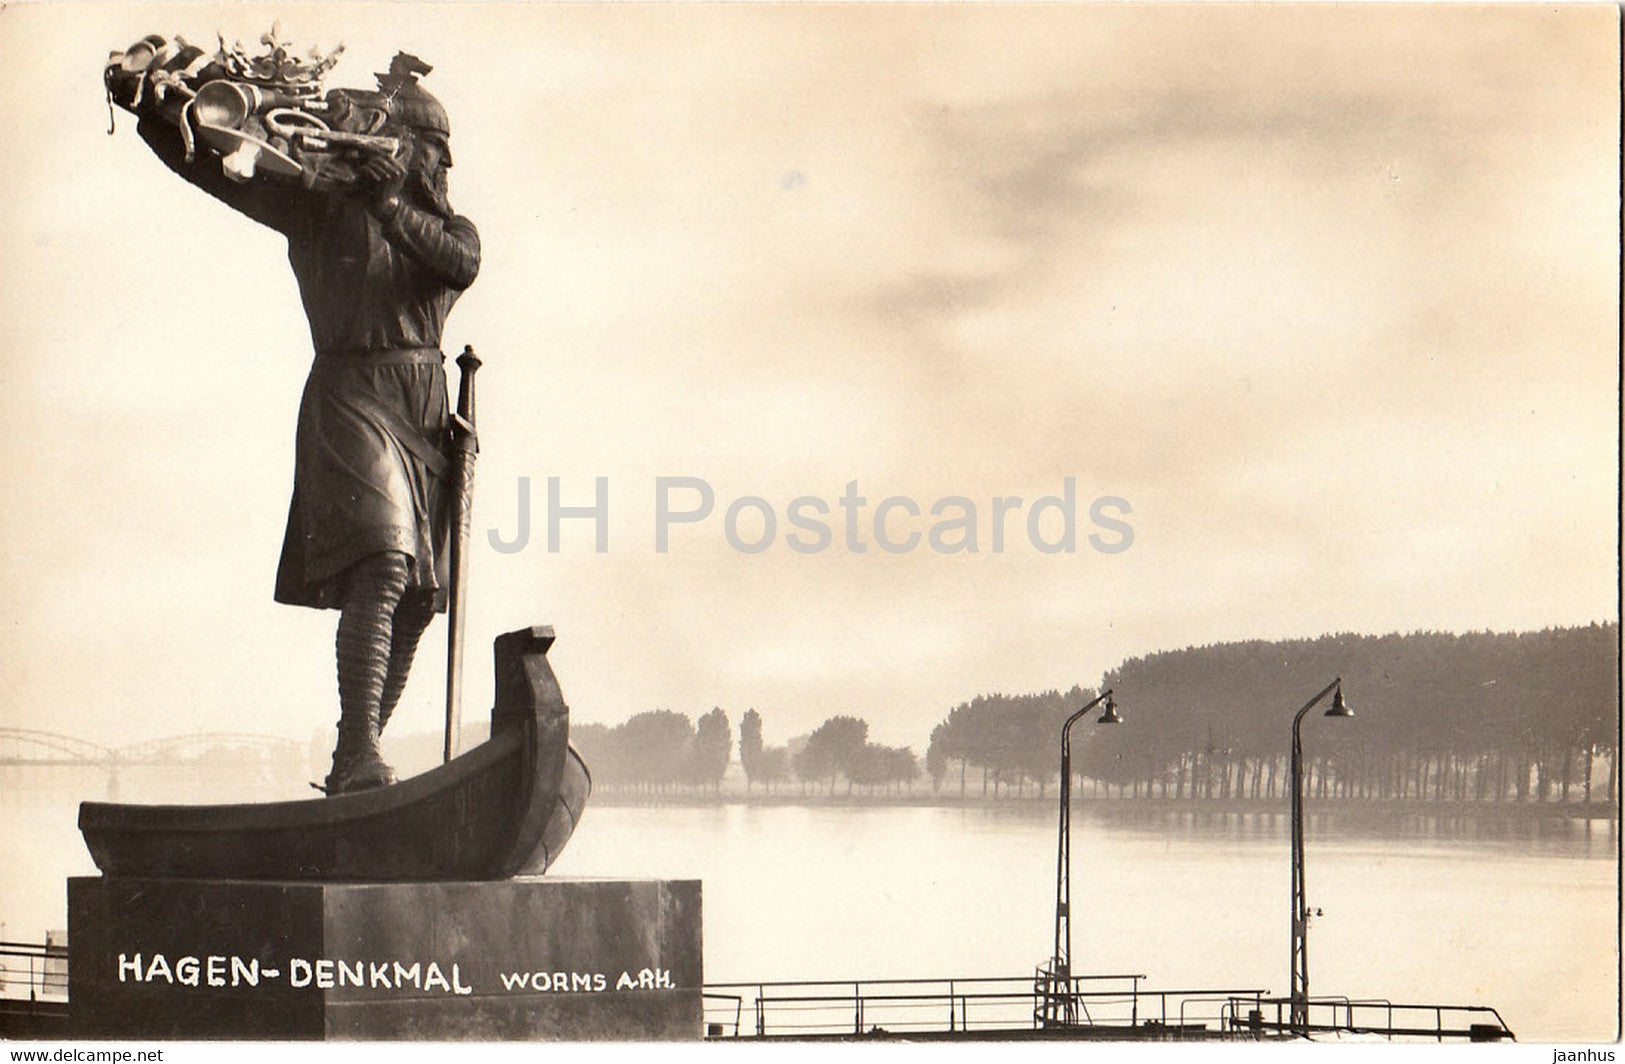 Hagen Denkmal - Worms A Rh - old postcard - Germany - unused - JH Postcards